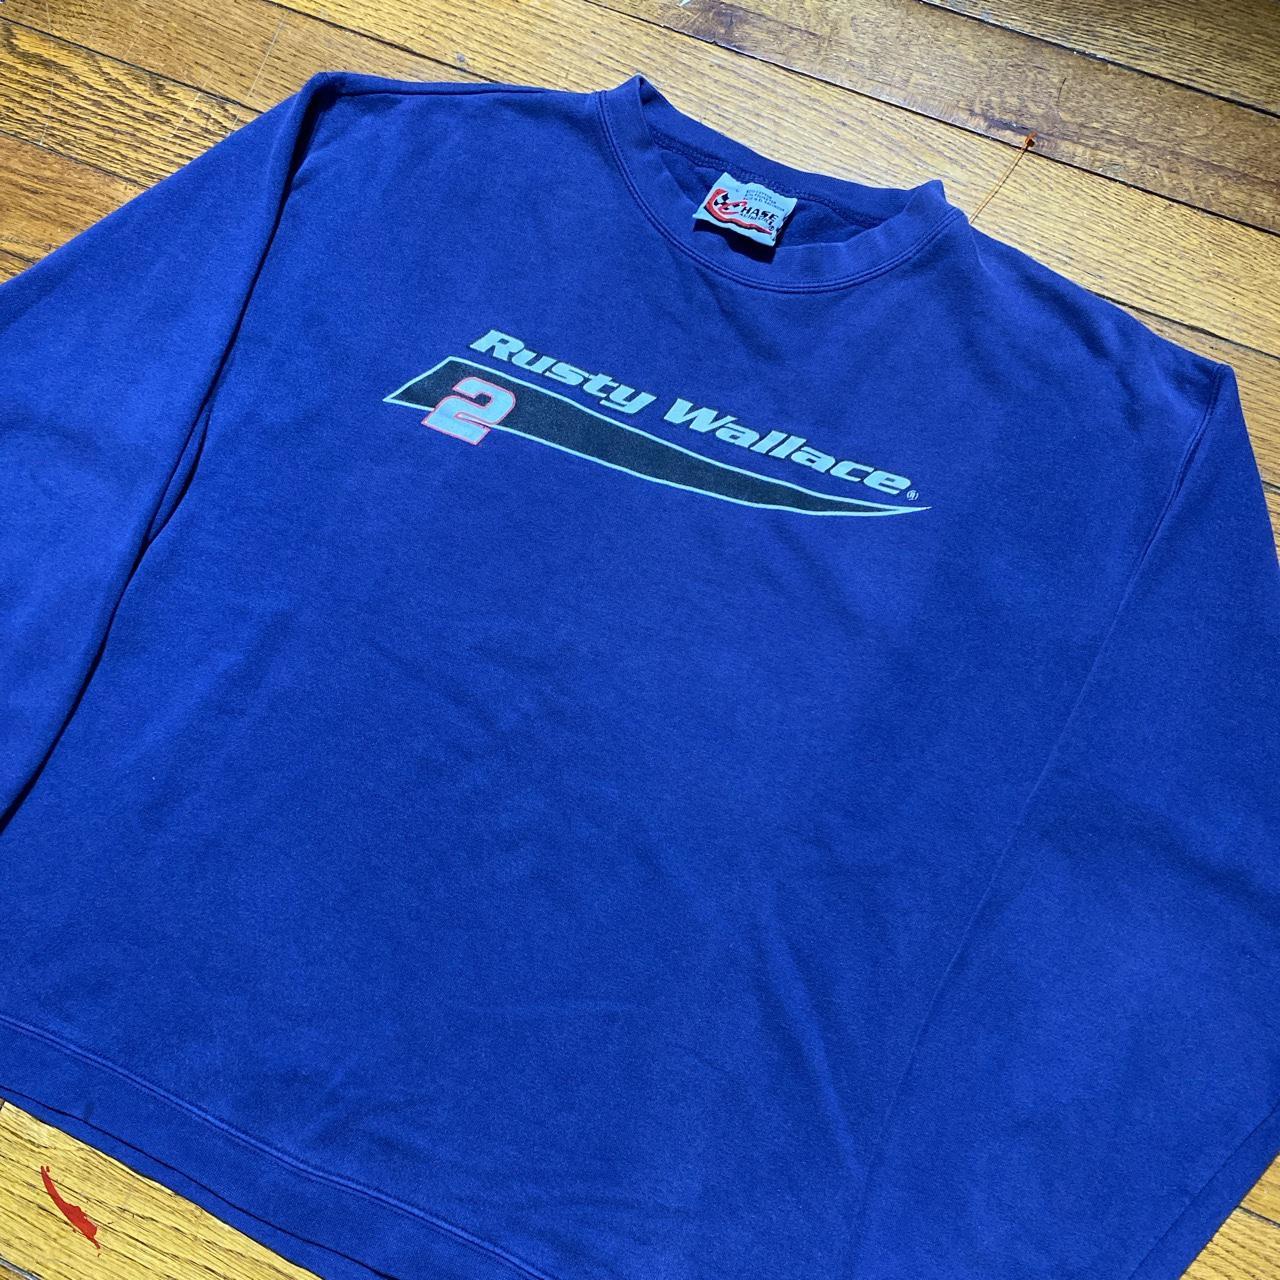 Chase Authentics Men's Blue and Black Sweatshirt (3)